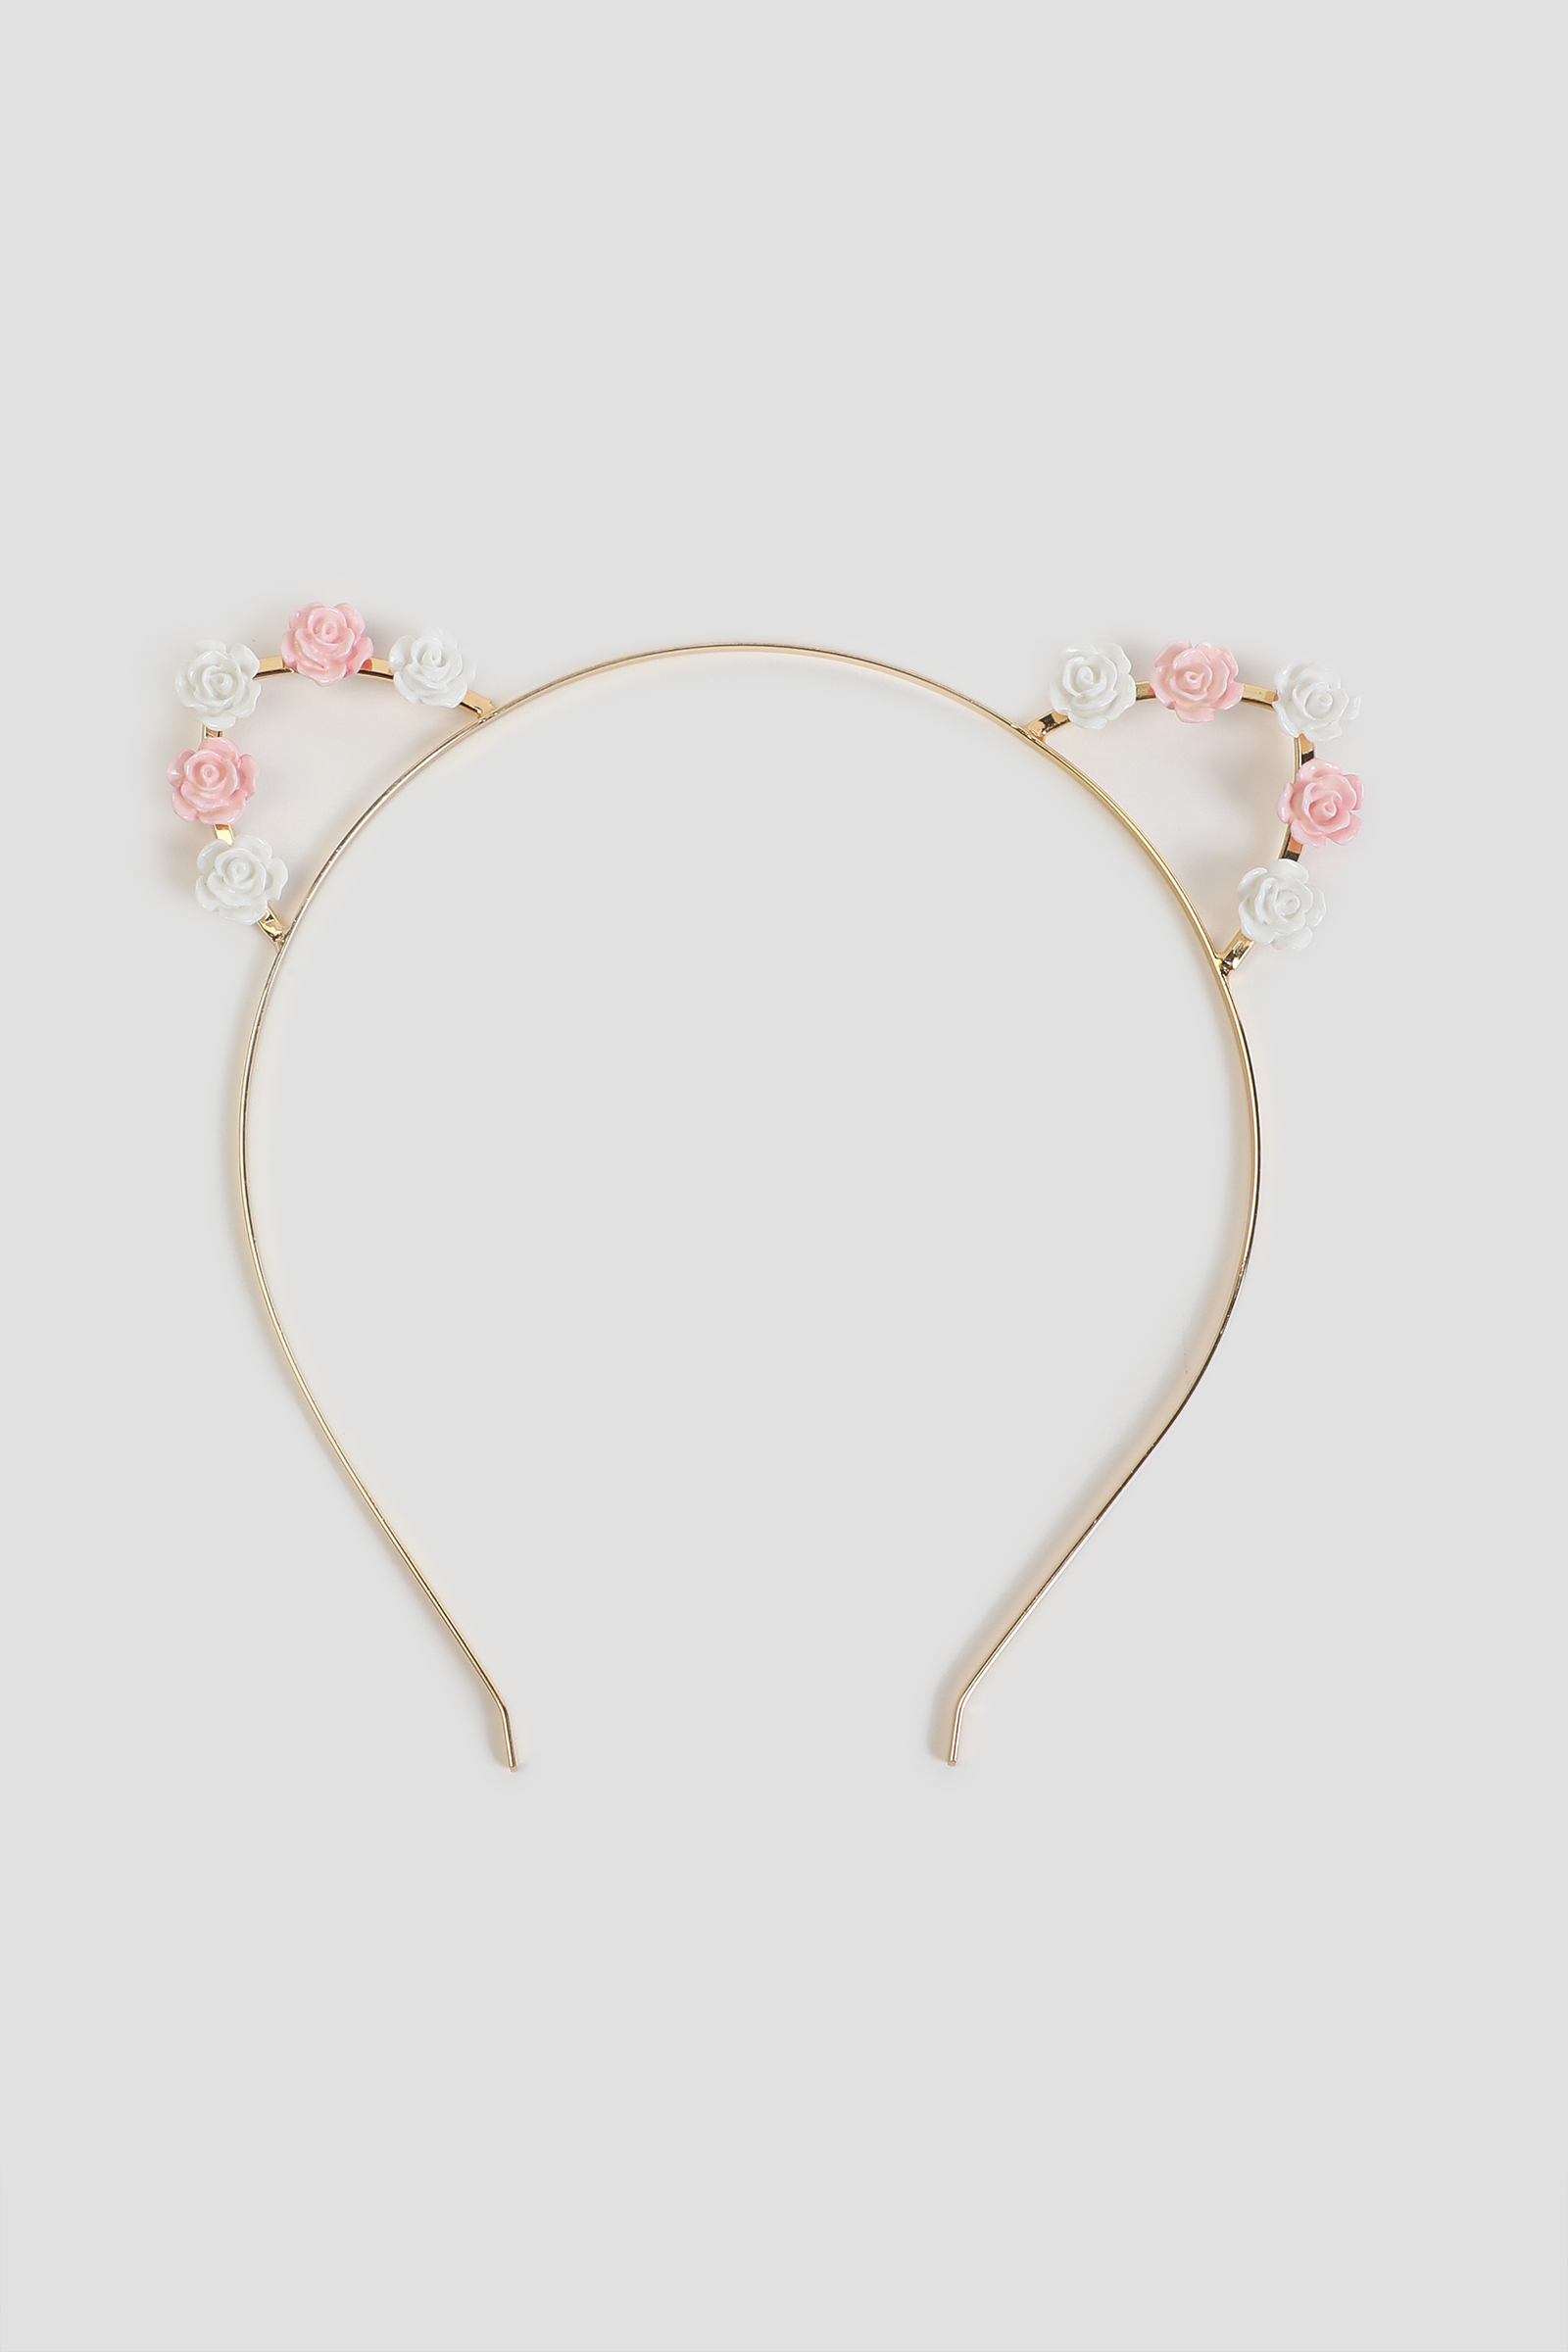 Ardene Mini Rose Cat Ears Headband in Gold